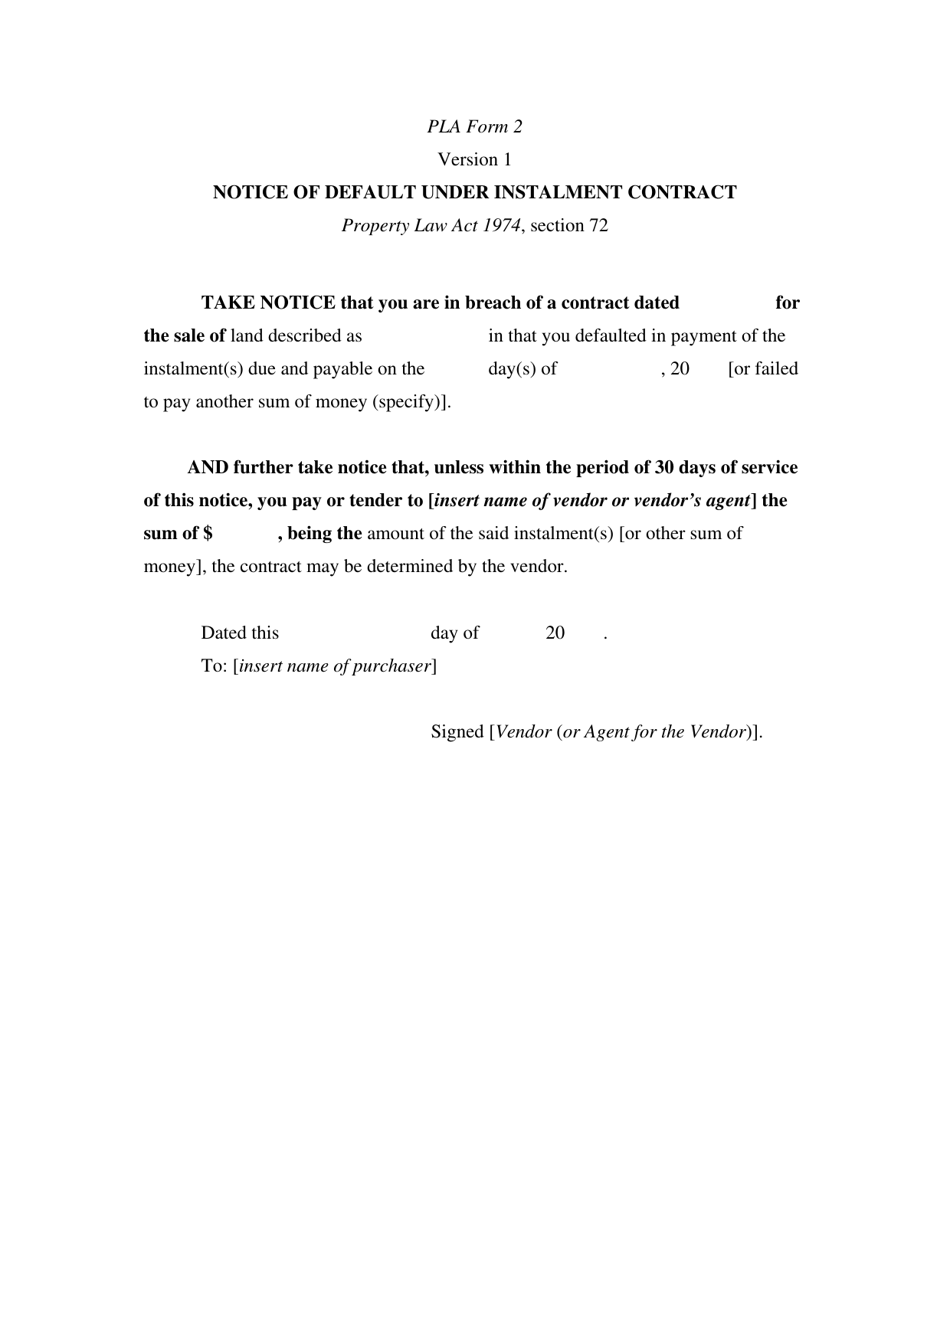 Form 2 Notice of Default Under Instalment Contract - Queensland, Australia, Page 1